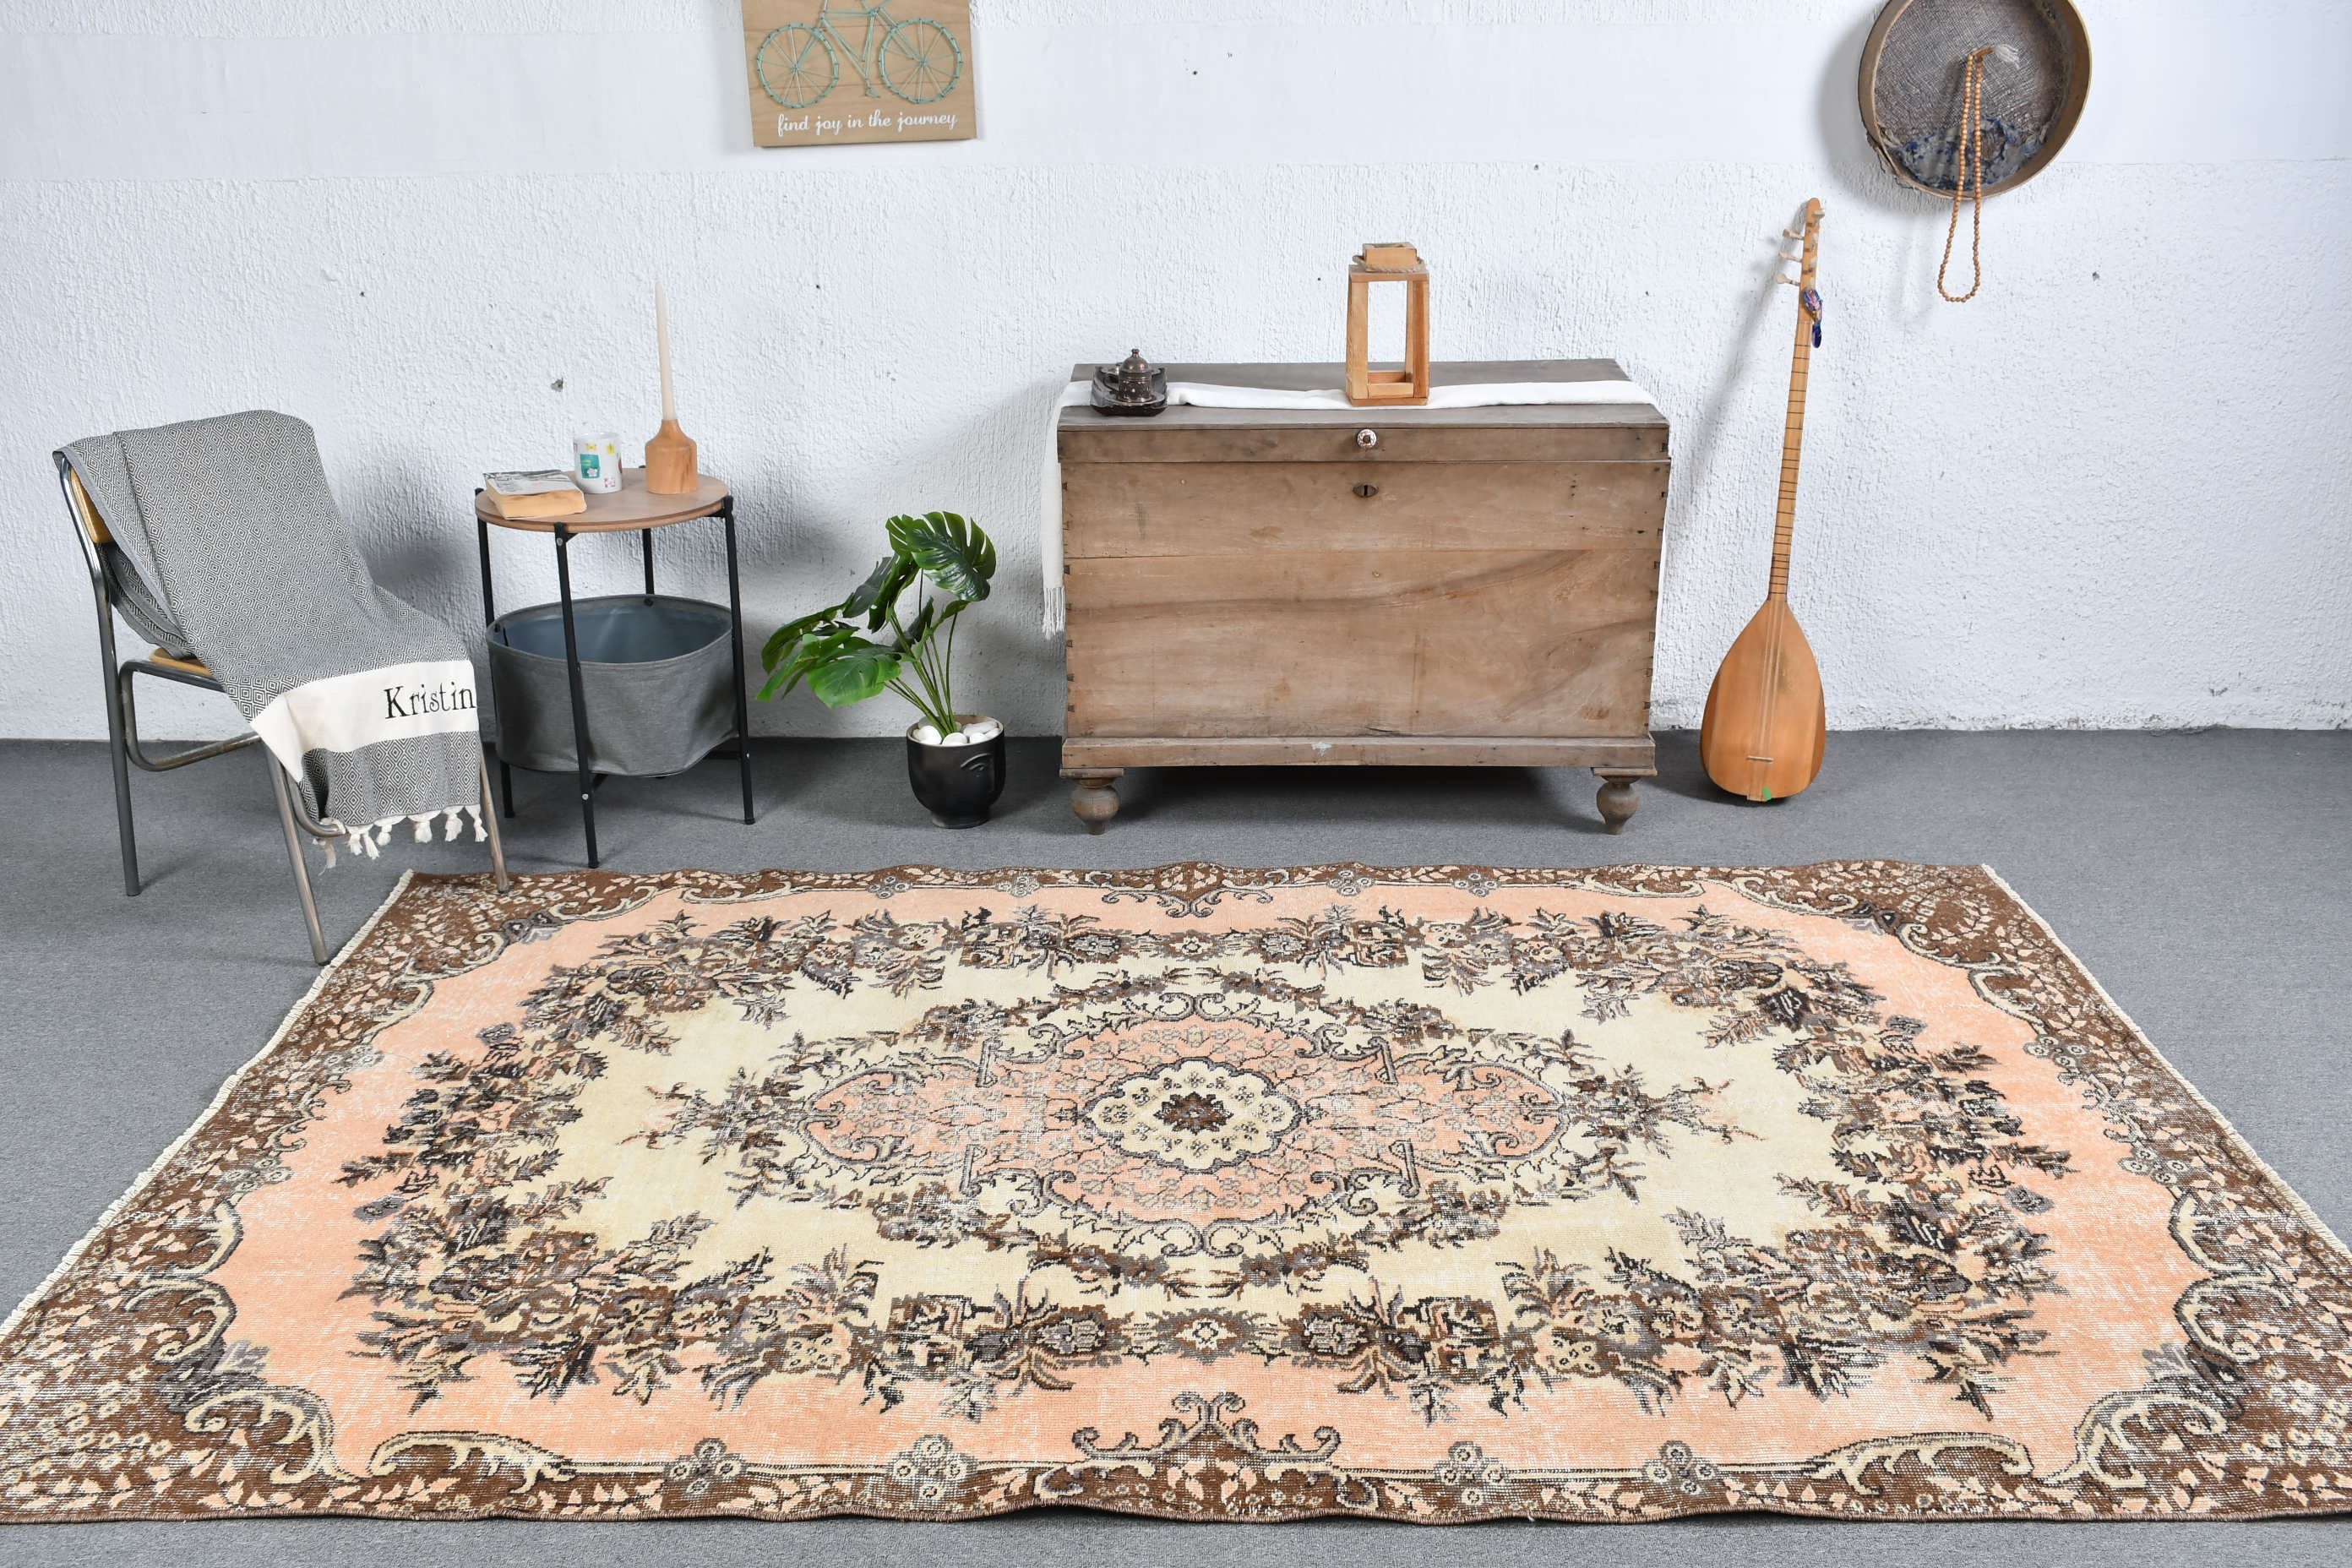 Turkish Rug, Antique Rugs, Vintage Rug, Rugs for Living Room, 5.4x9 ft Large Rug, Dining Room Rug, Brown Bedroom Rugs